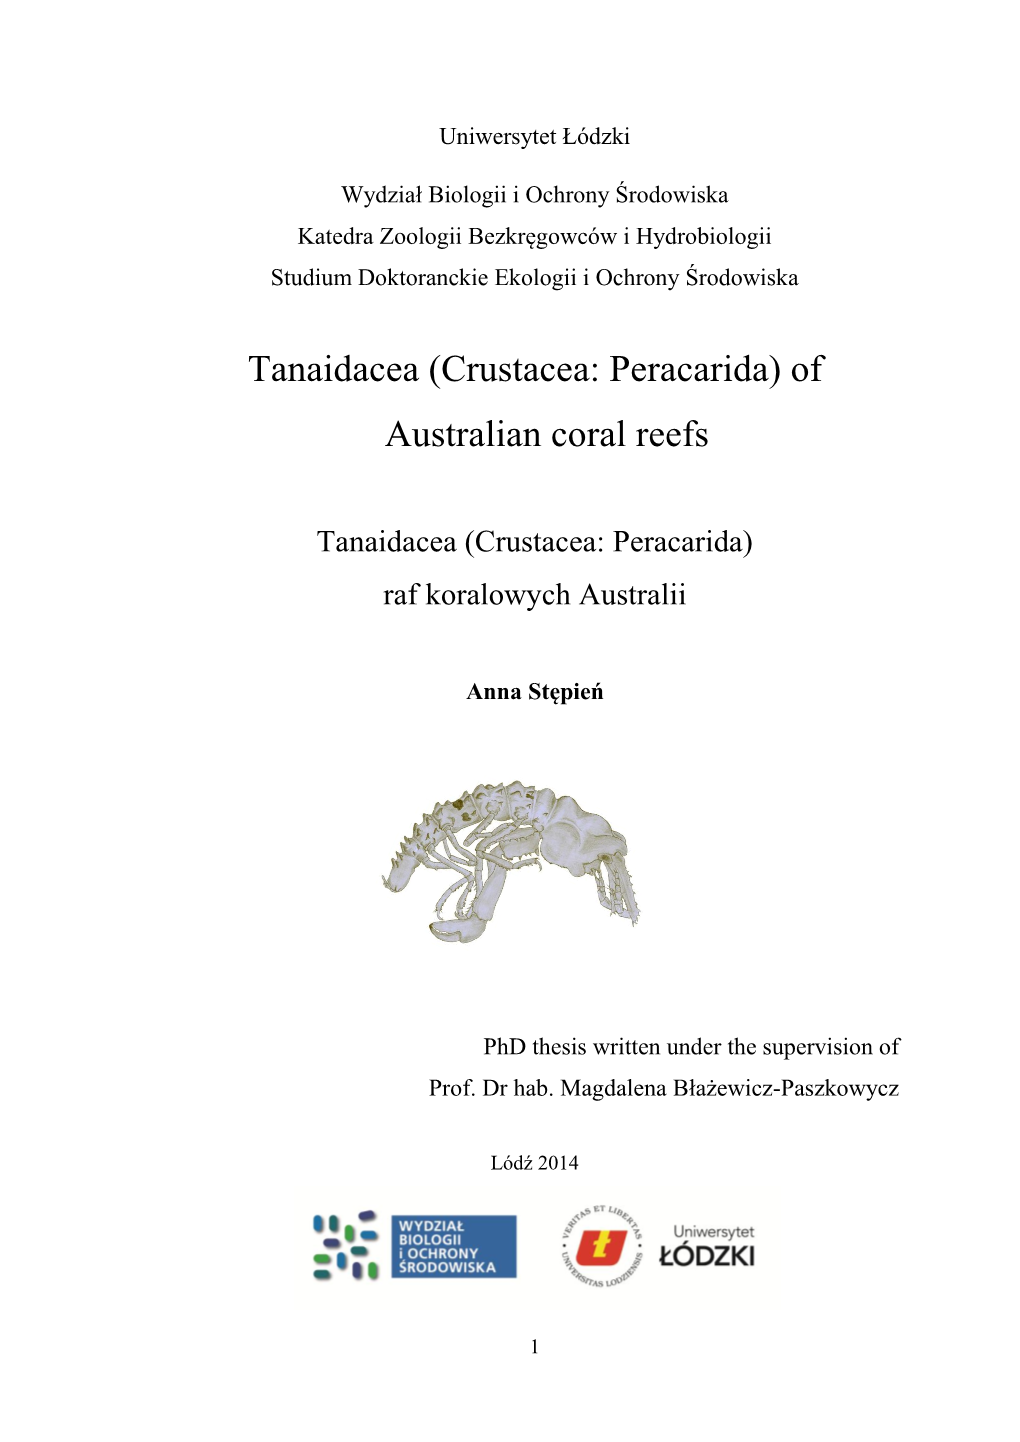 Tanaidacea (Crustacea: Peracarida) of Australian Coral Reefs